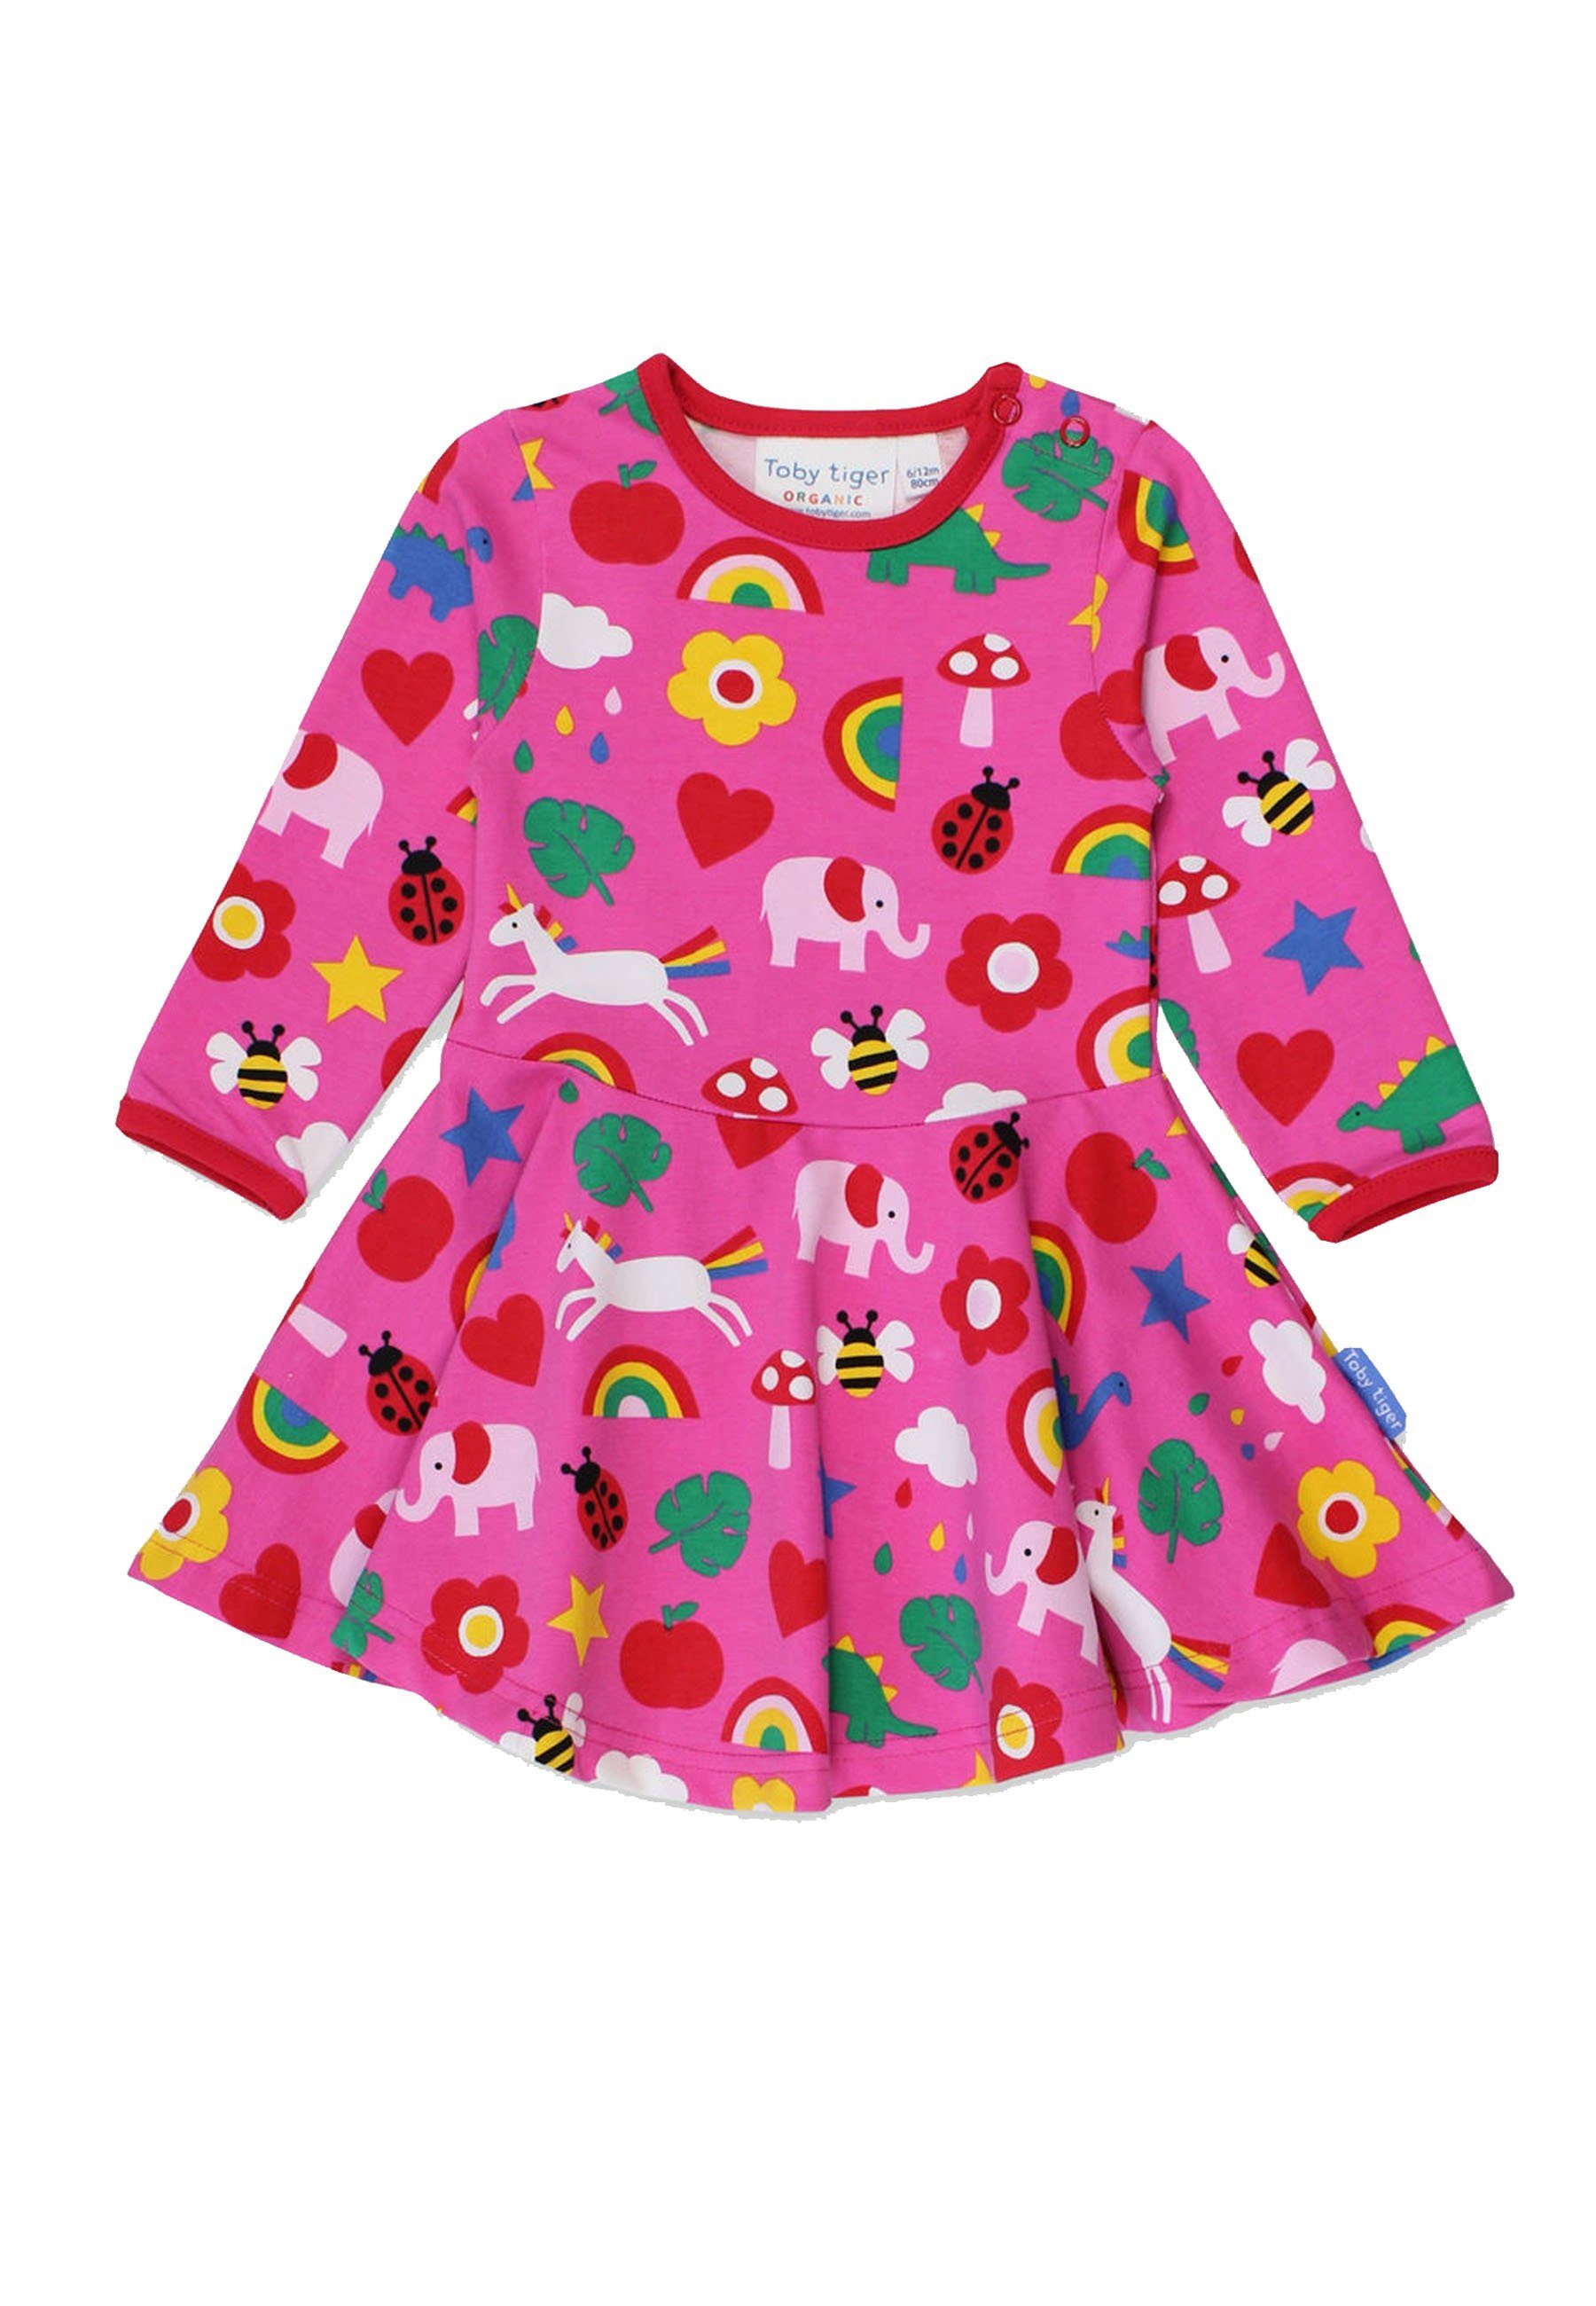 Print Shirtkleid Kleid Toby Skater mit Spielzeug Tiger